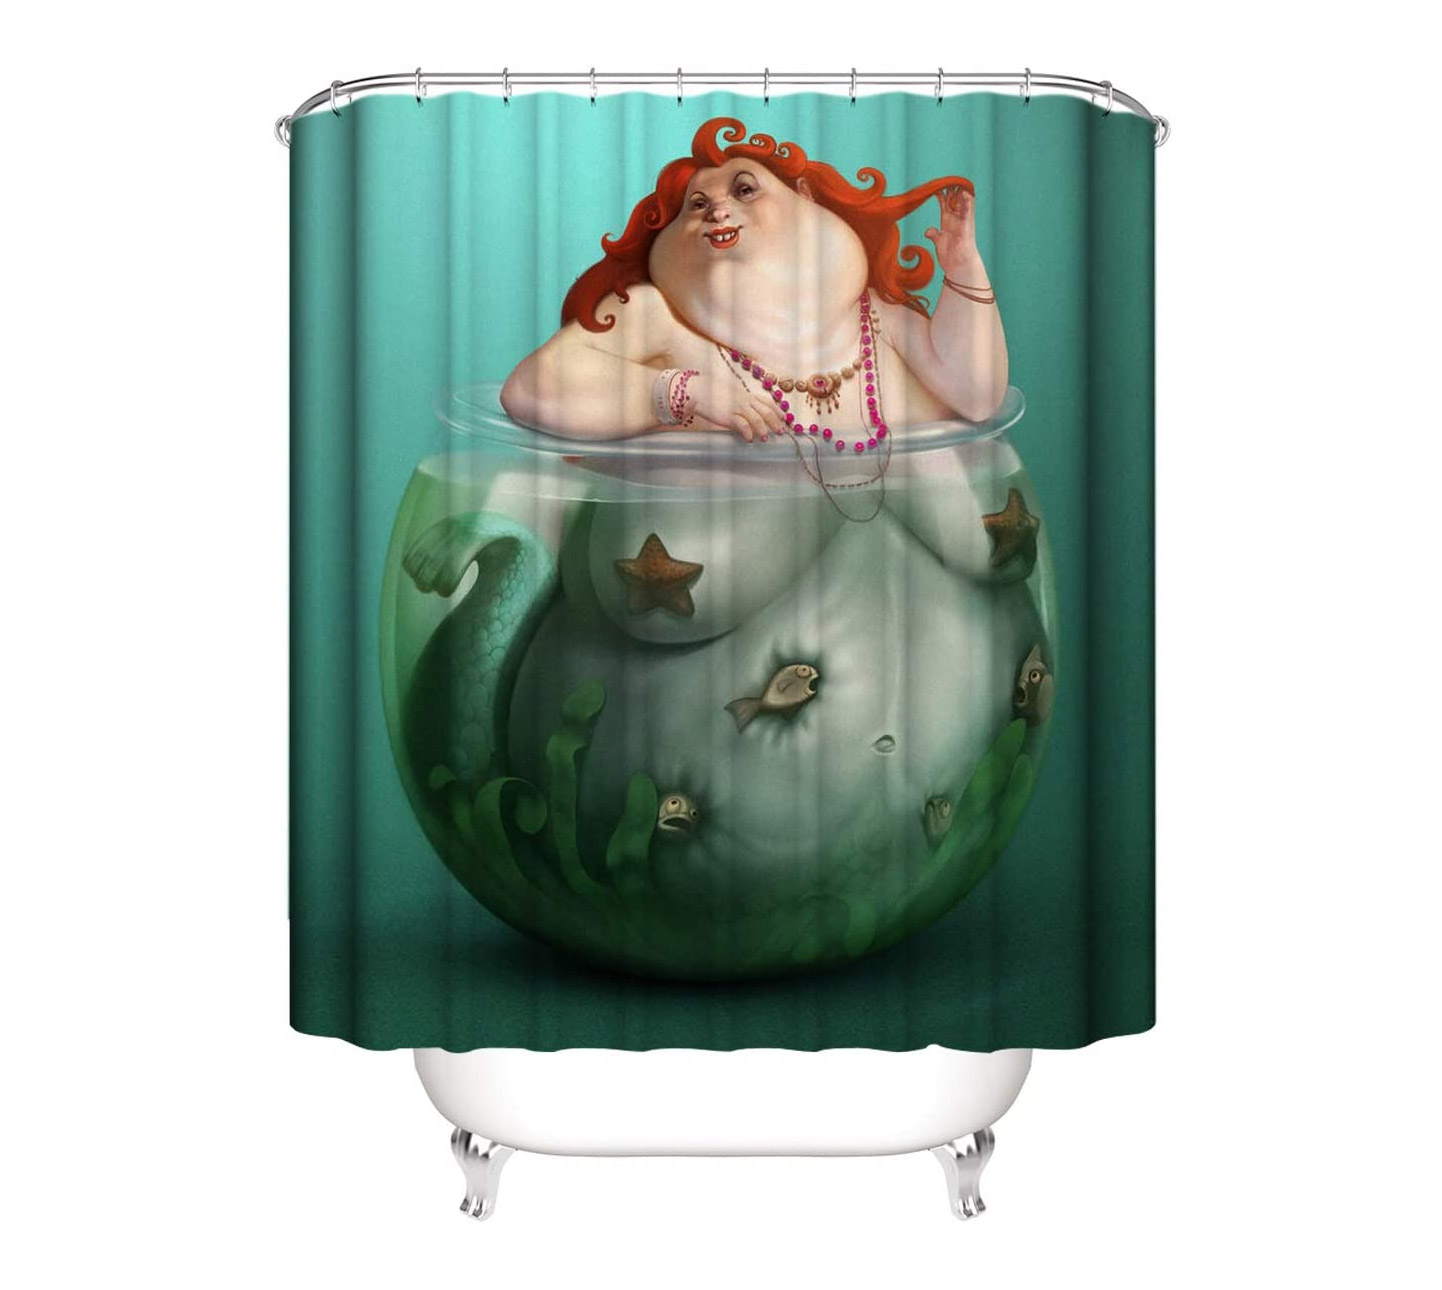 The Big Mermaid Shower Curtain - Fat mermaid funny shower curtain